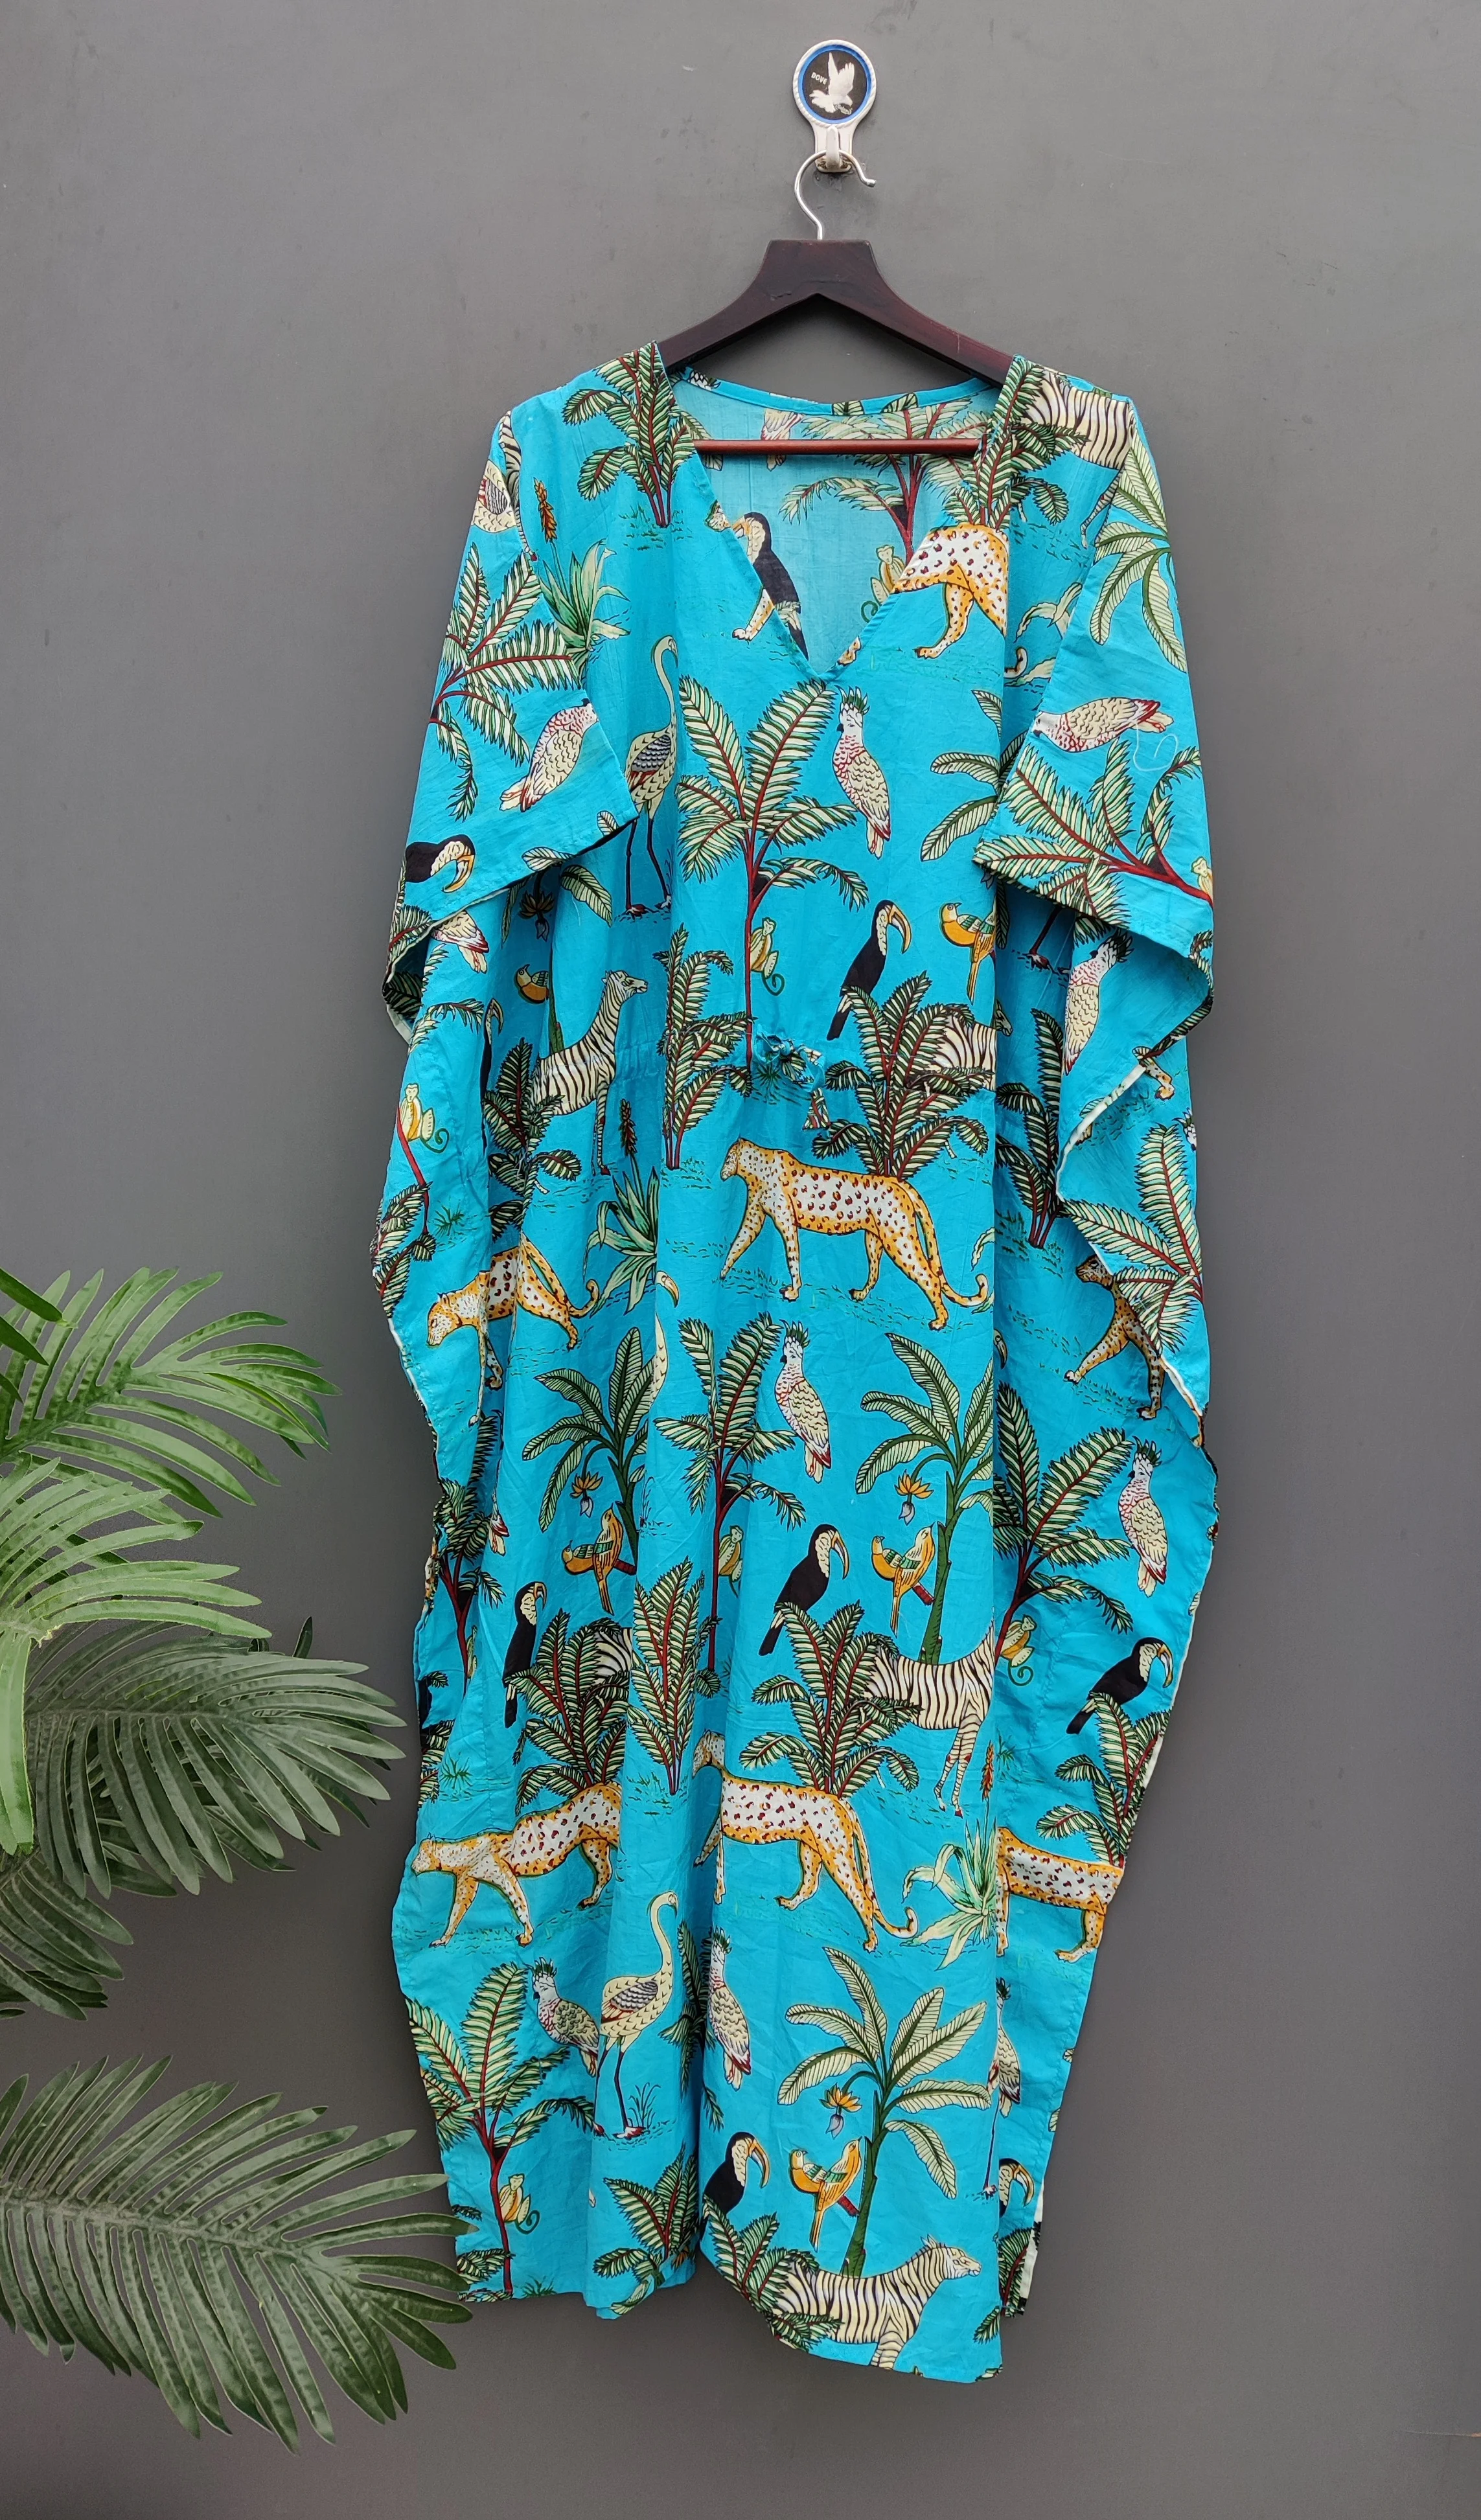 Turquoise Beautiful Cotton Jungle Printed Kaftan Women Fashion Light Weight Night Wear Hand Made Bikini Wrap Up Summer Dress